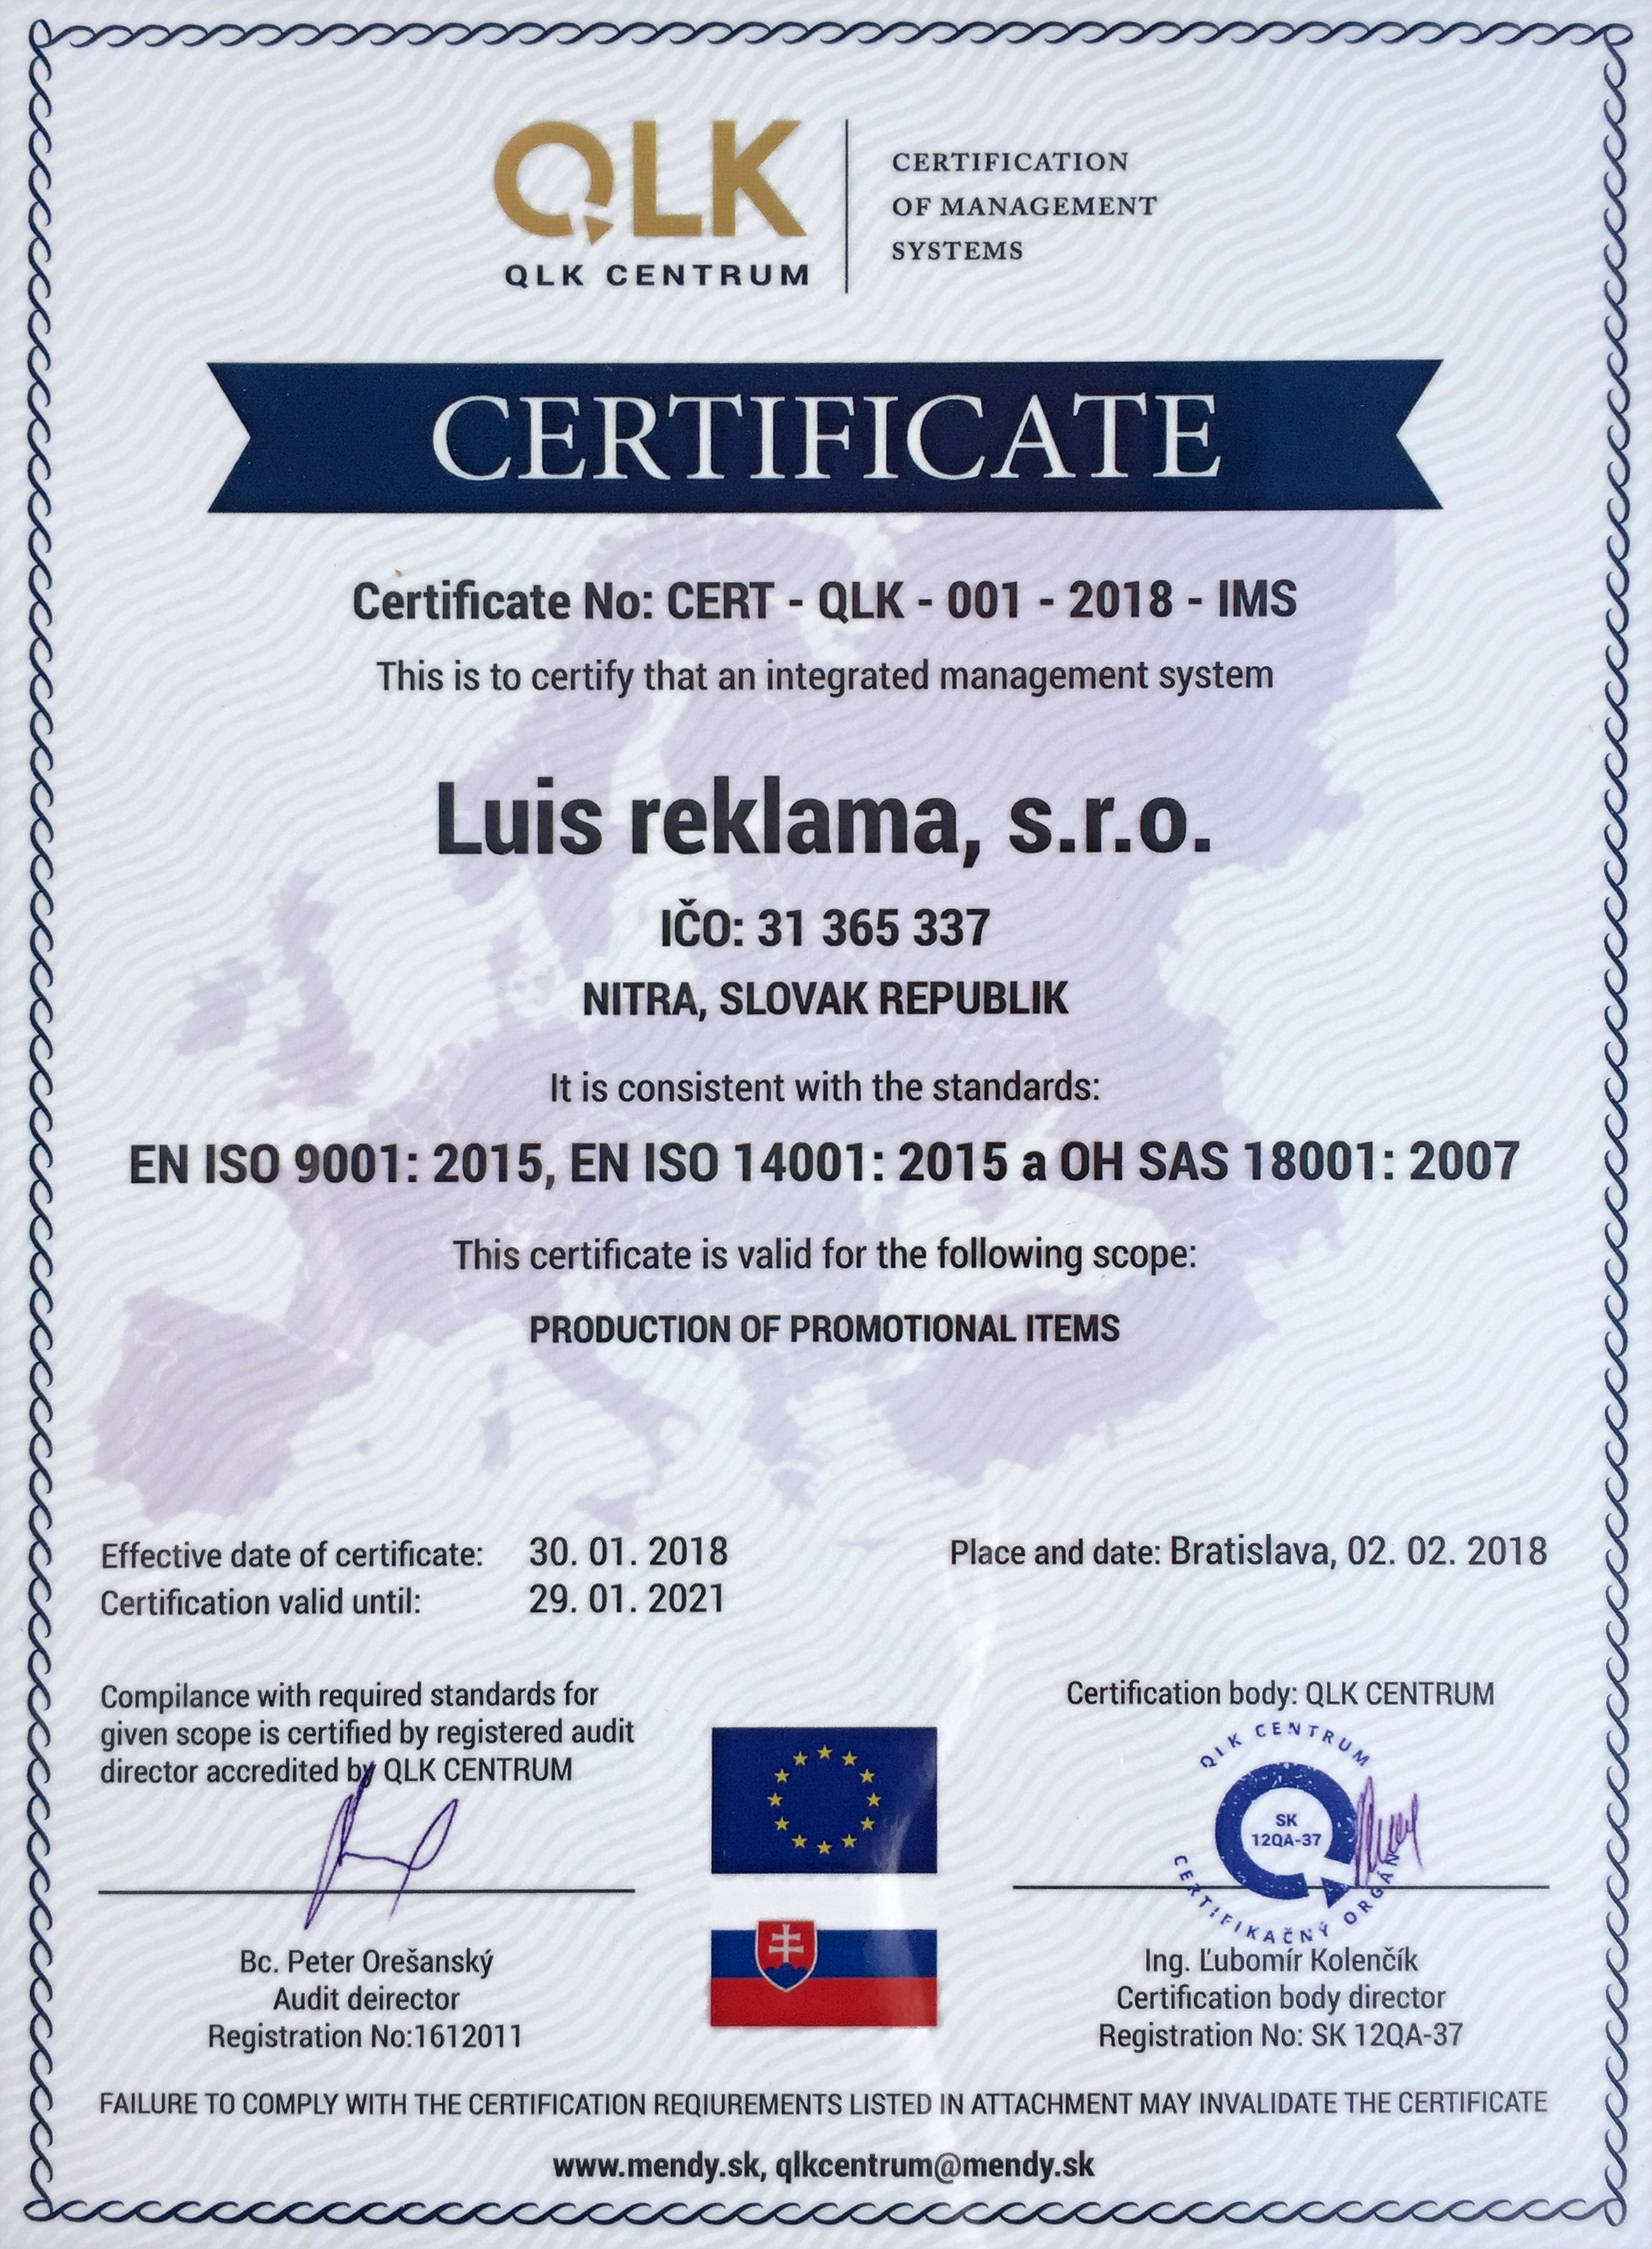 certifikát ISO, OHSAS  - výroba reklamy anglický